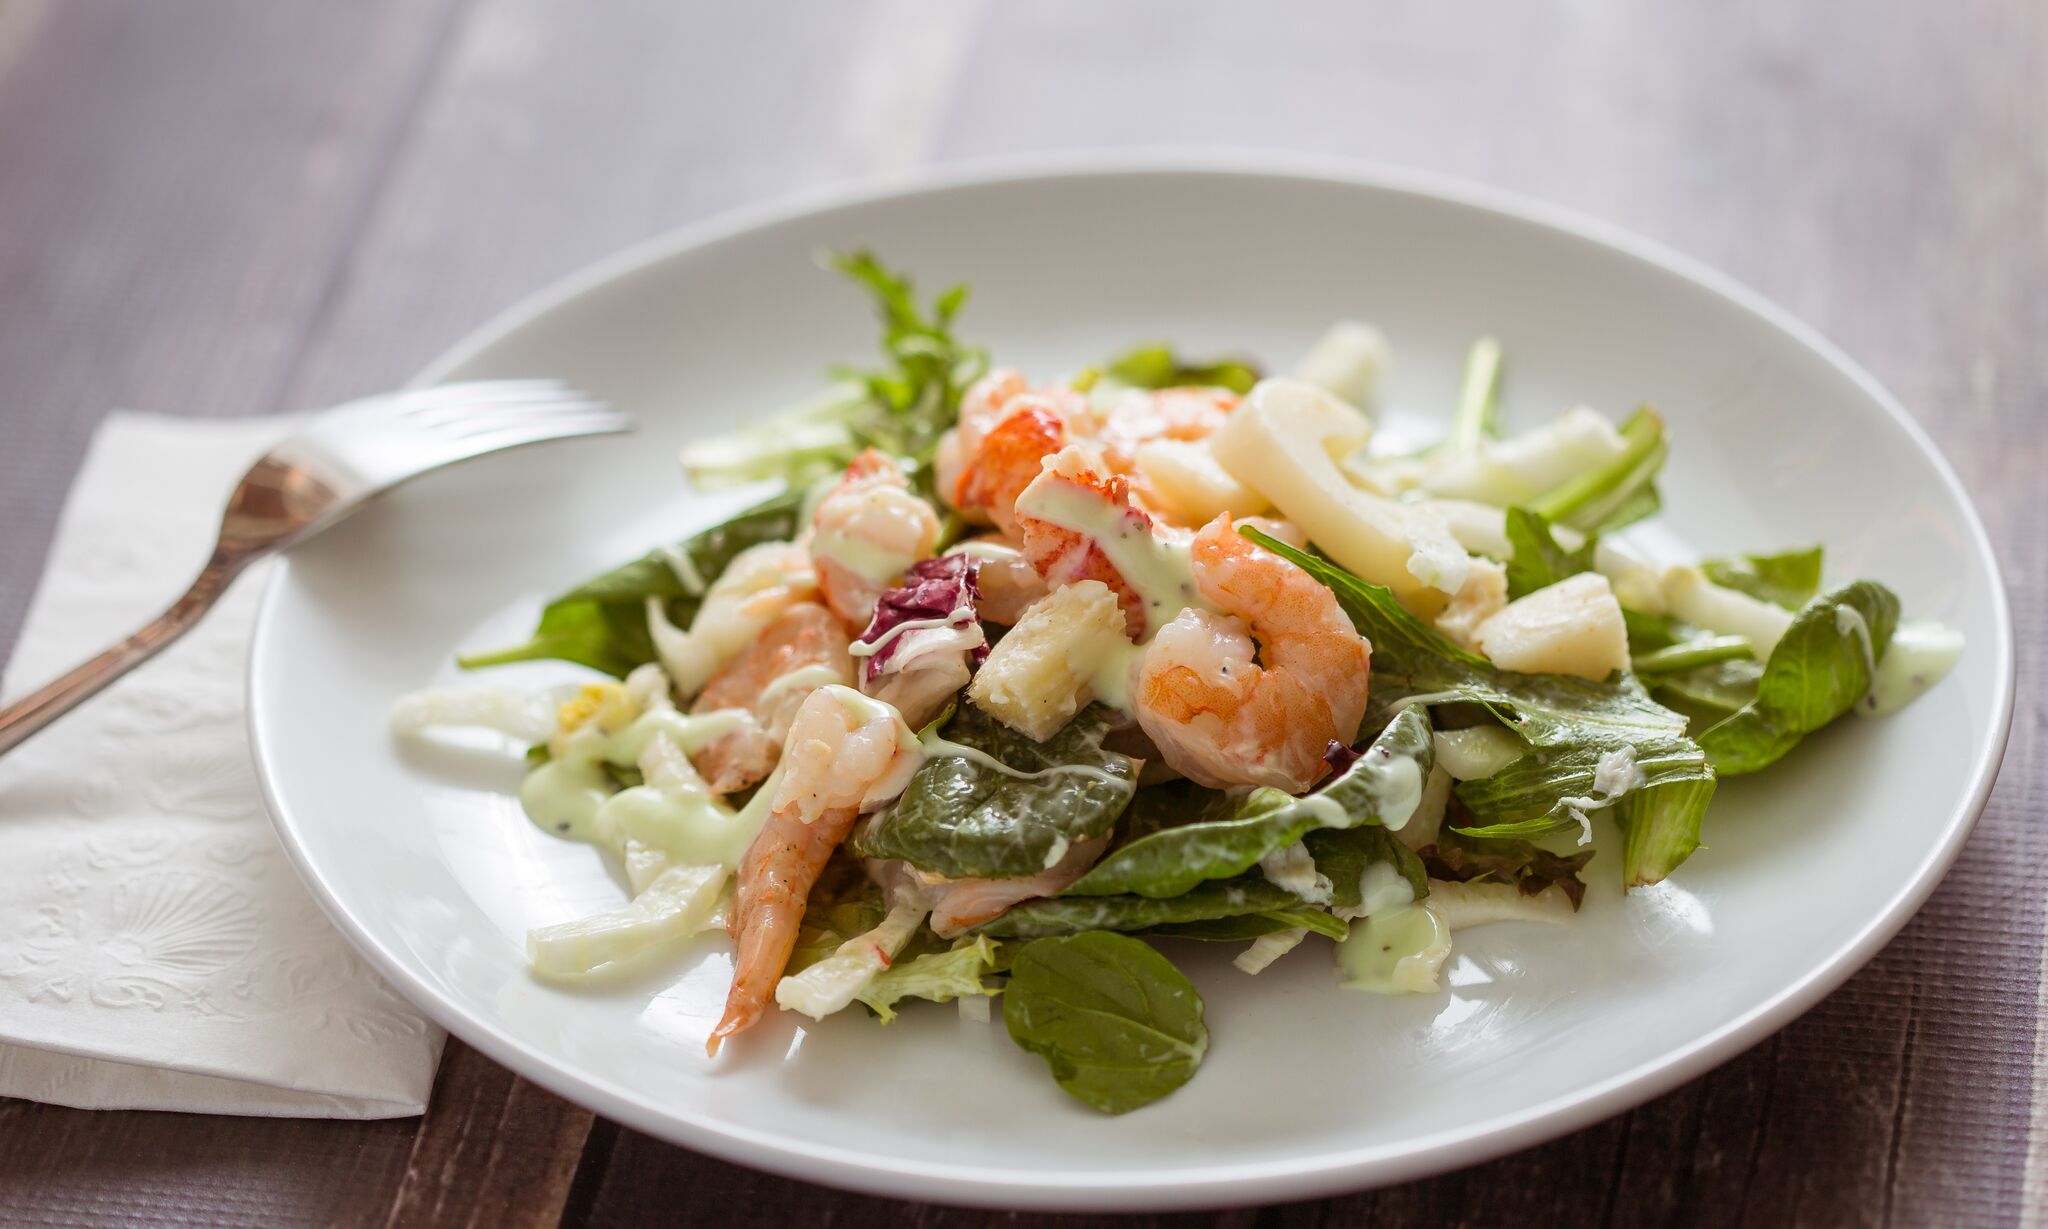 Serve salad on a plate and enjoy. 